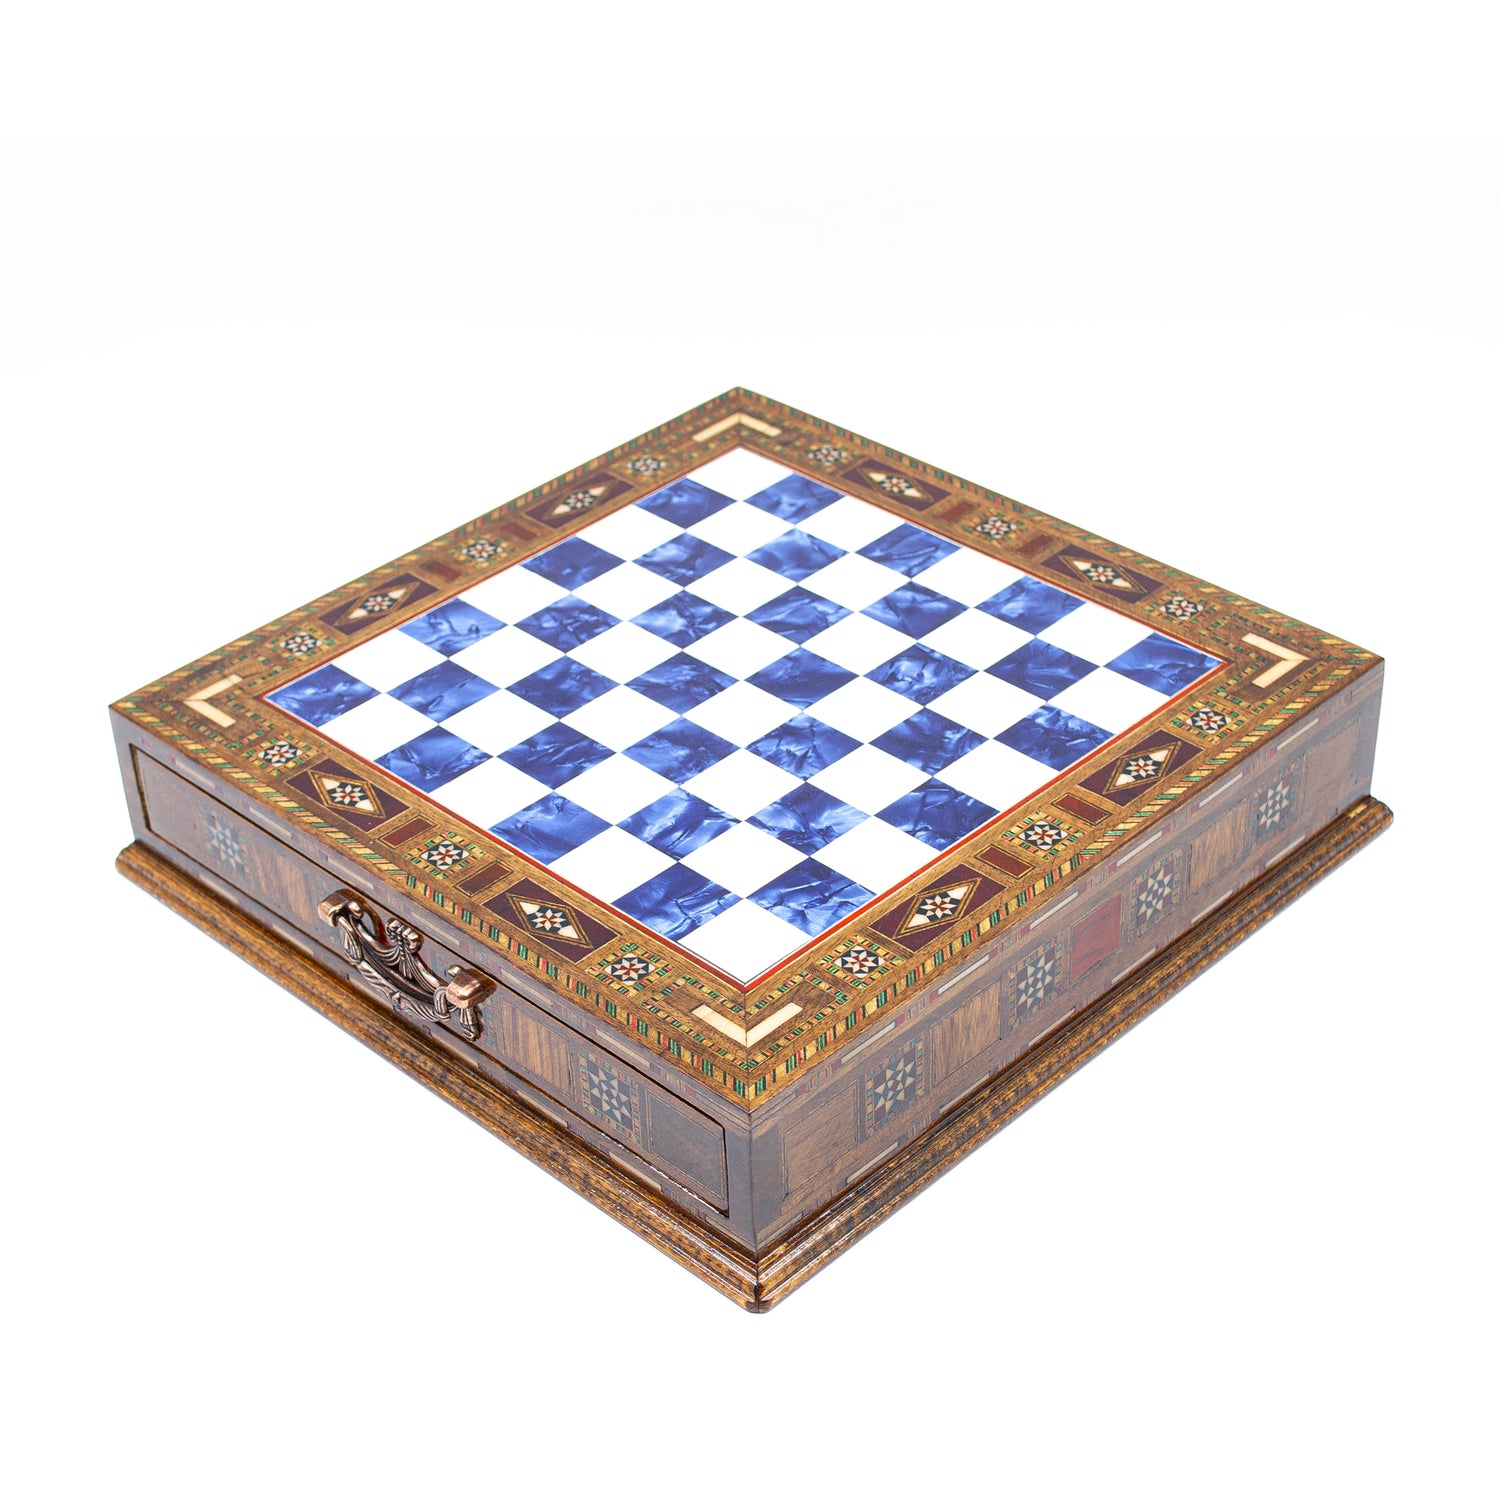 Blue Wooden Chess: Unique with Storage - Ketohandcraft